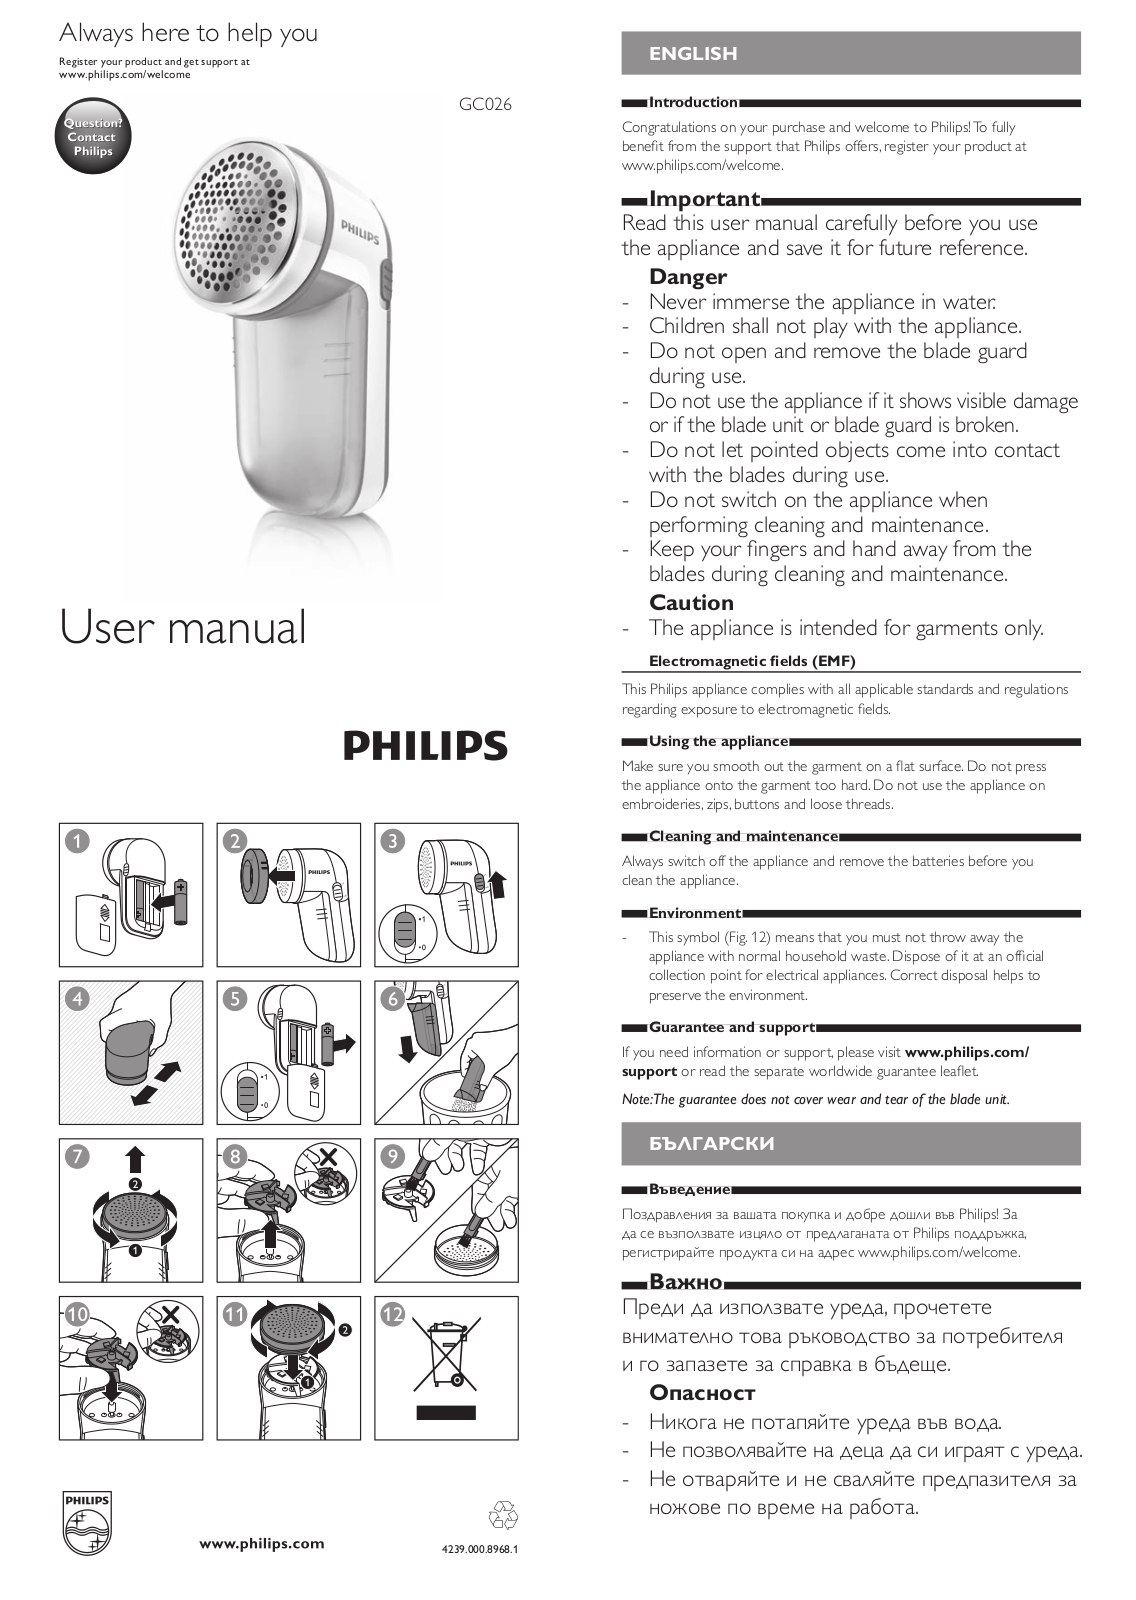 Philips GC026-00 User Manual